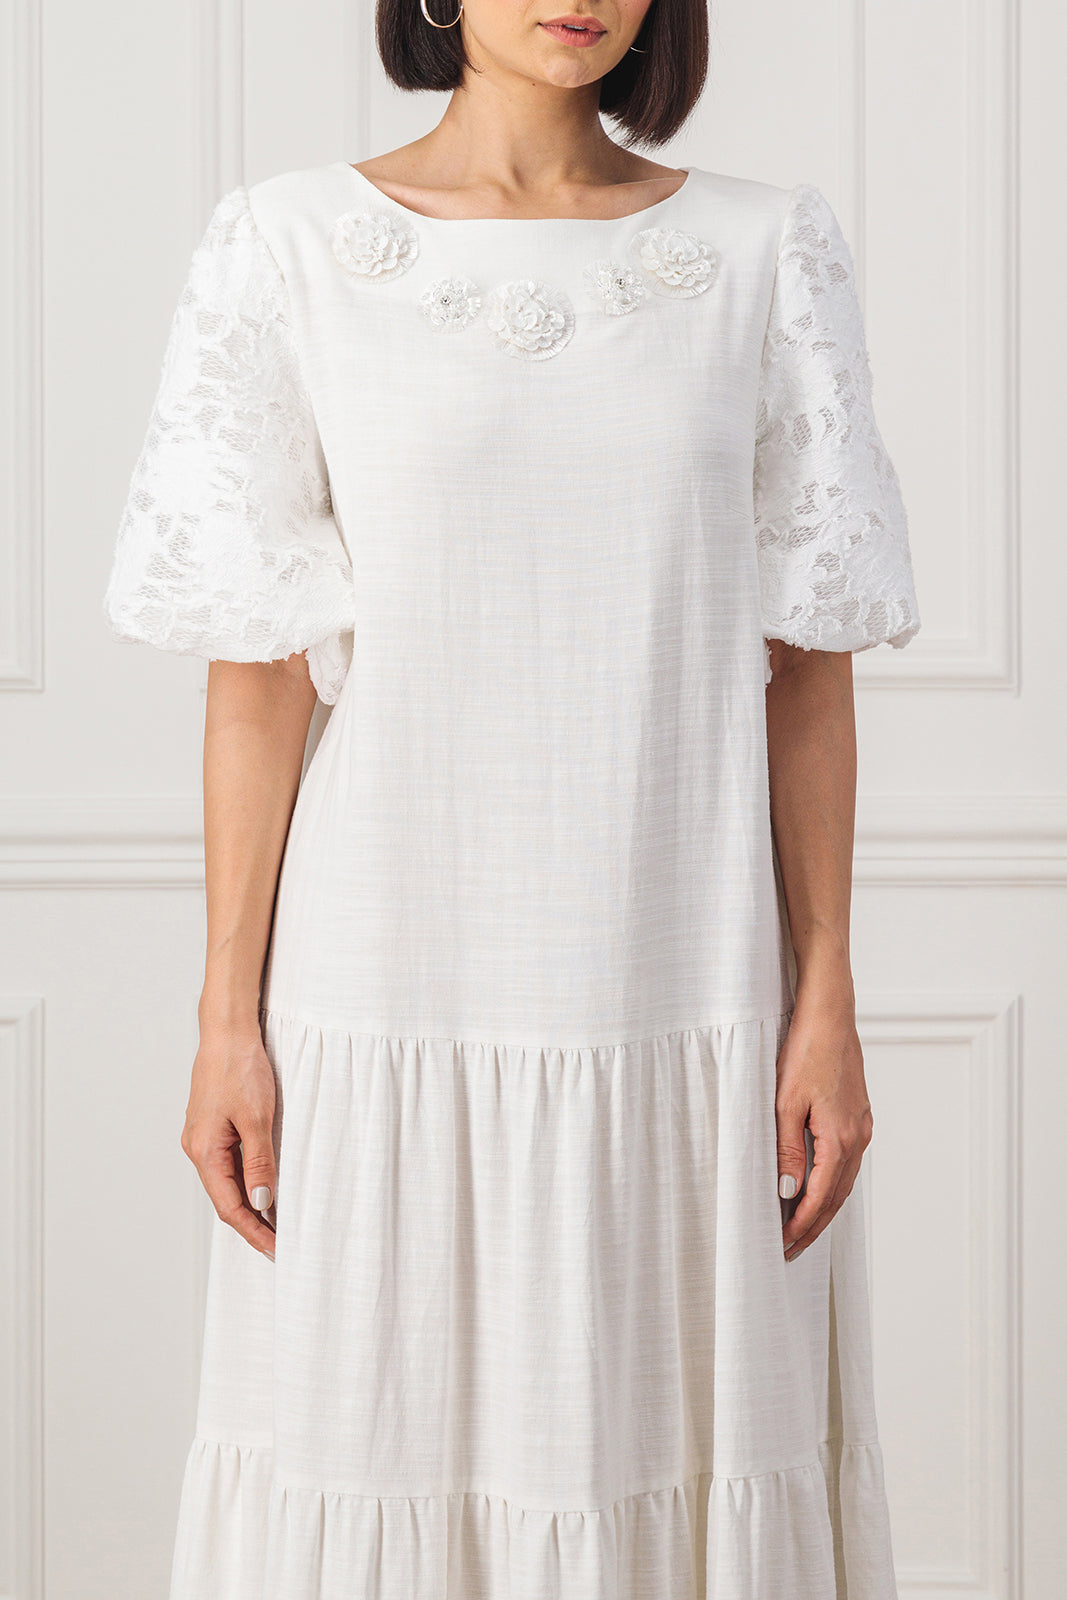 Off-white Linen dress with embellished neckline